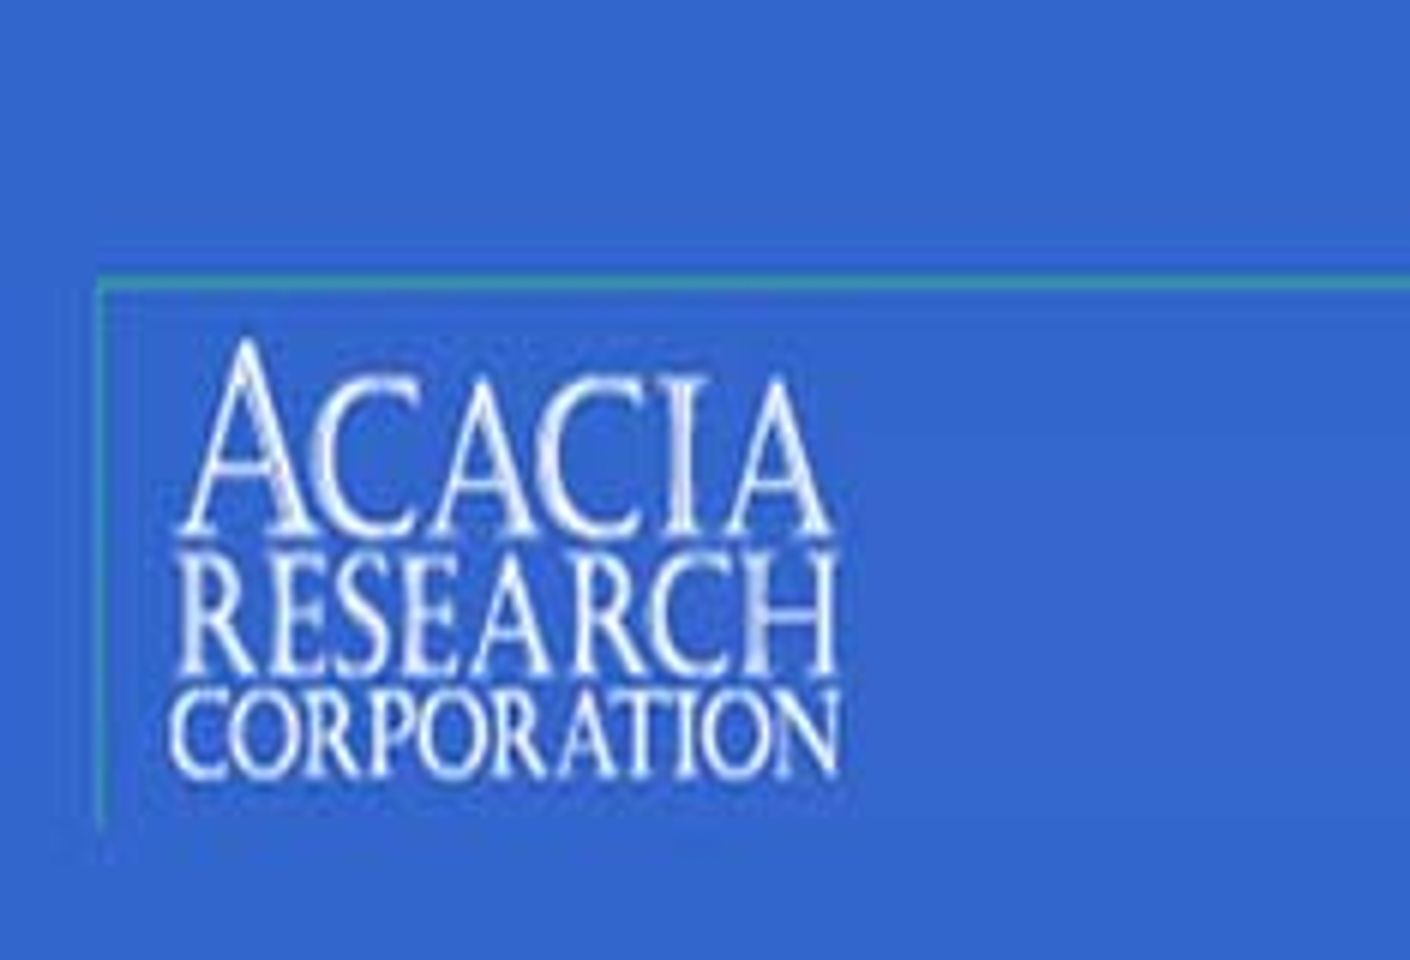 Acacia Counter-sued For Unfair Trade, Judicial Abuse